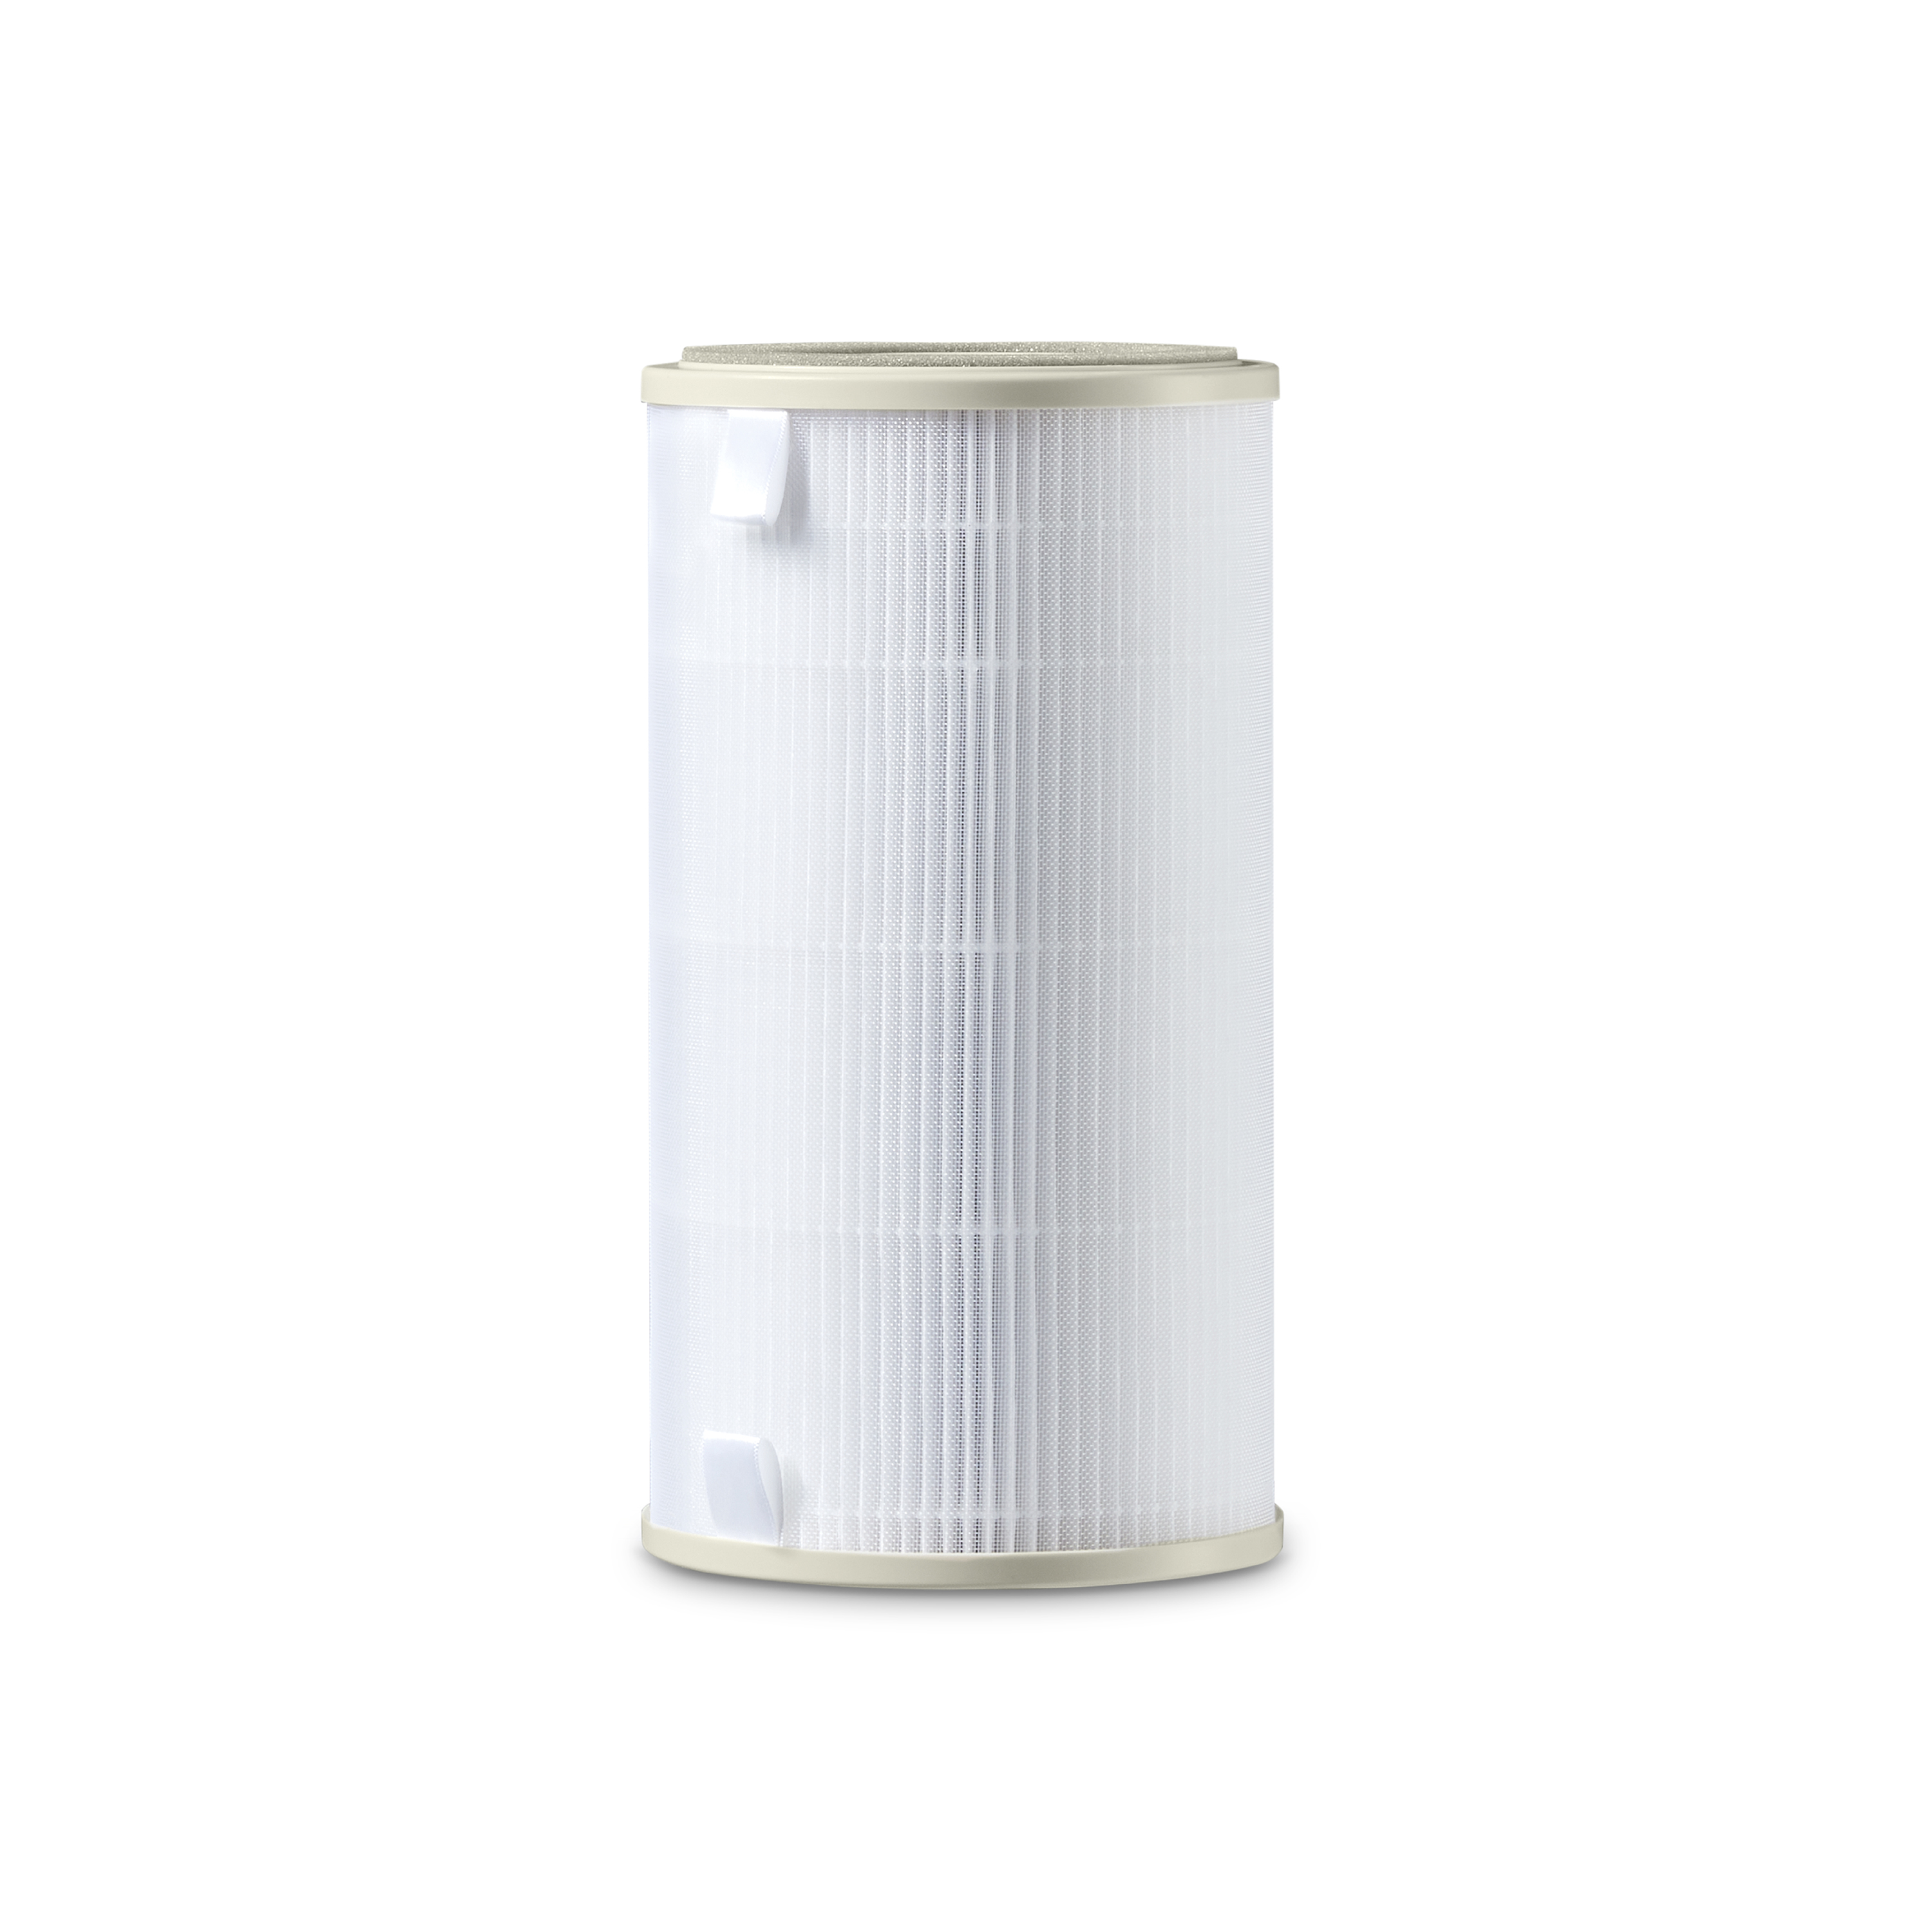 Medium Room Air Purifier Replacement Filter